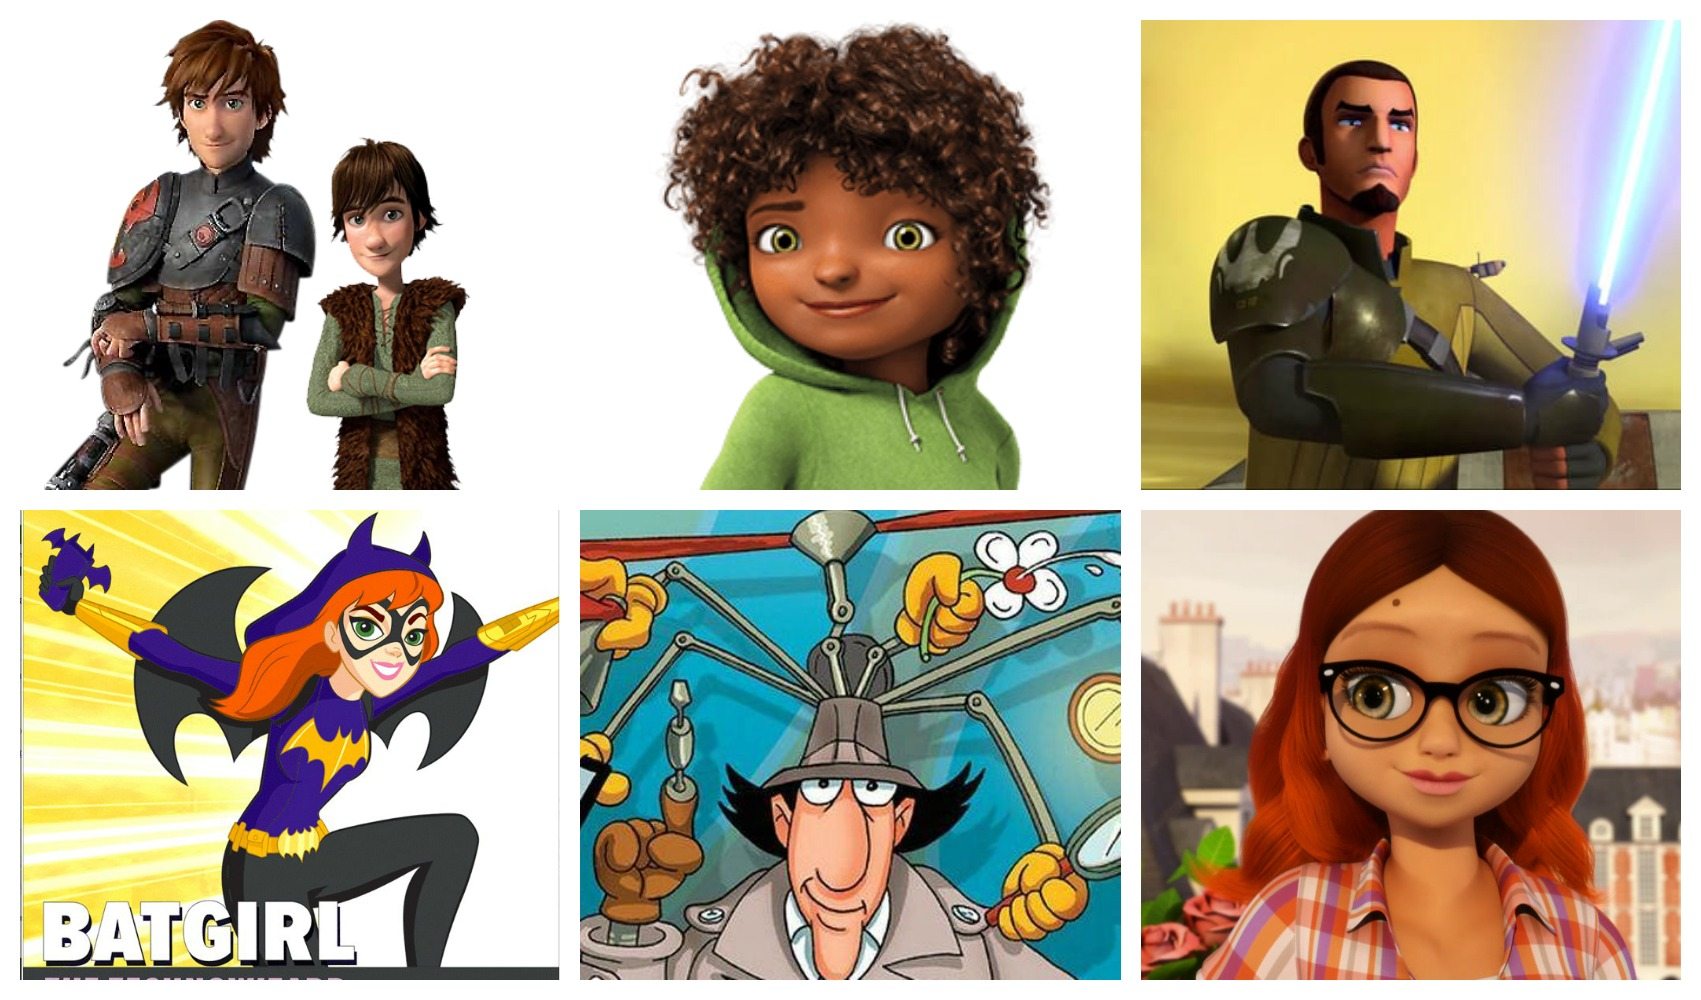 Smart Kind Characters in children's media